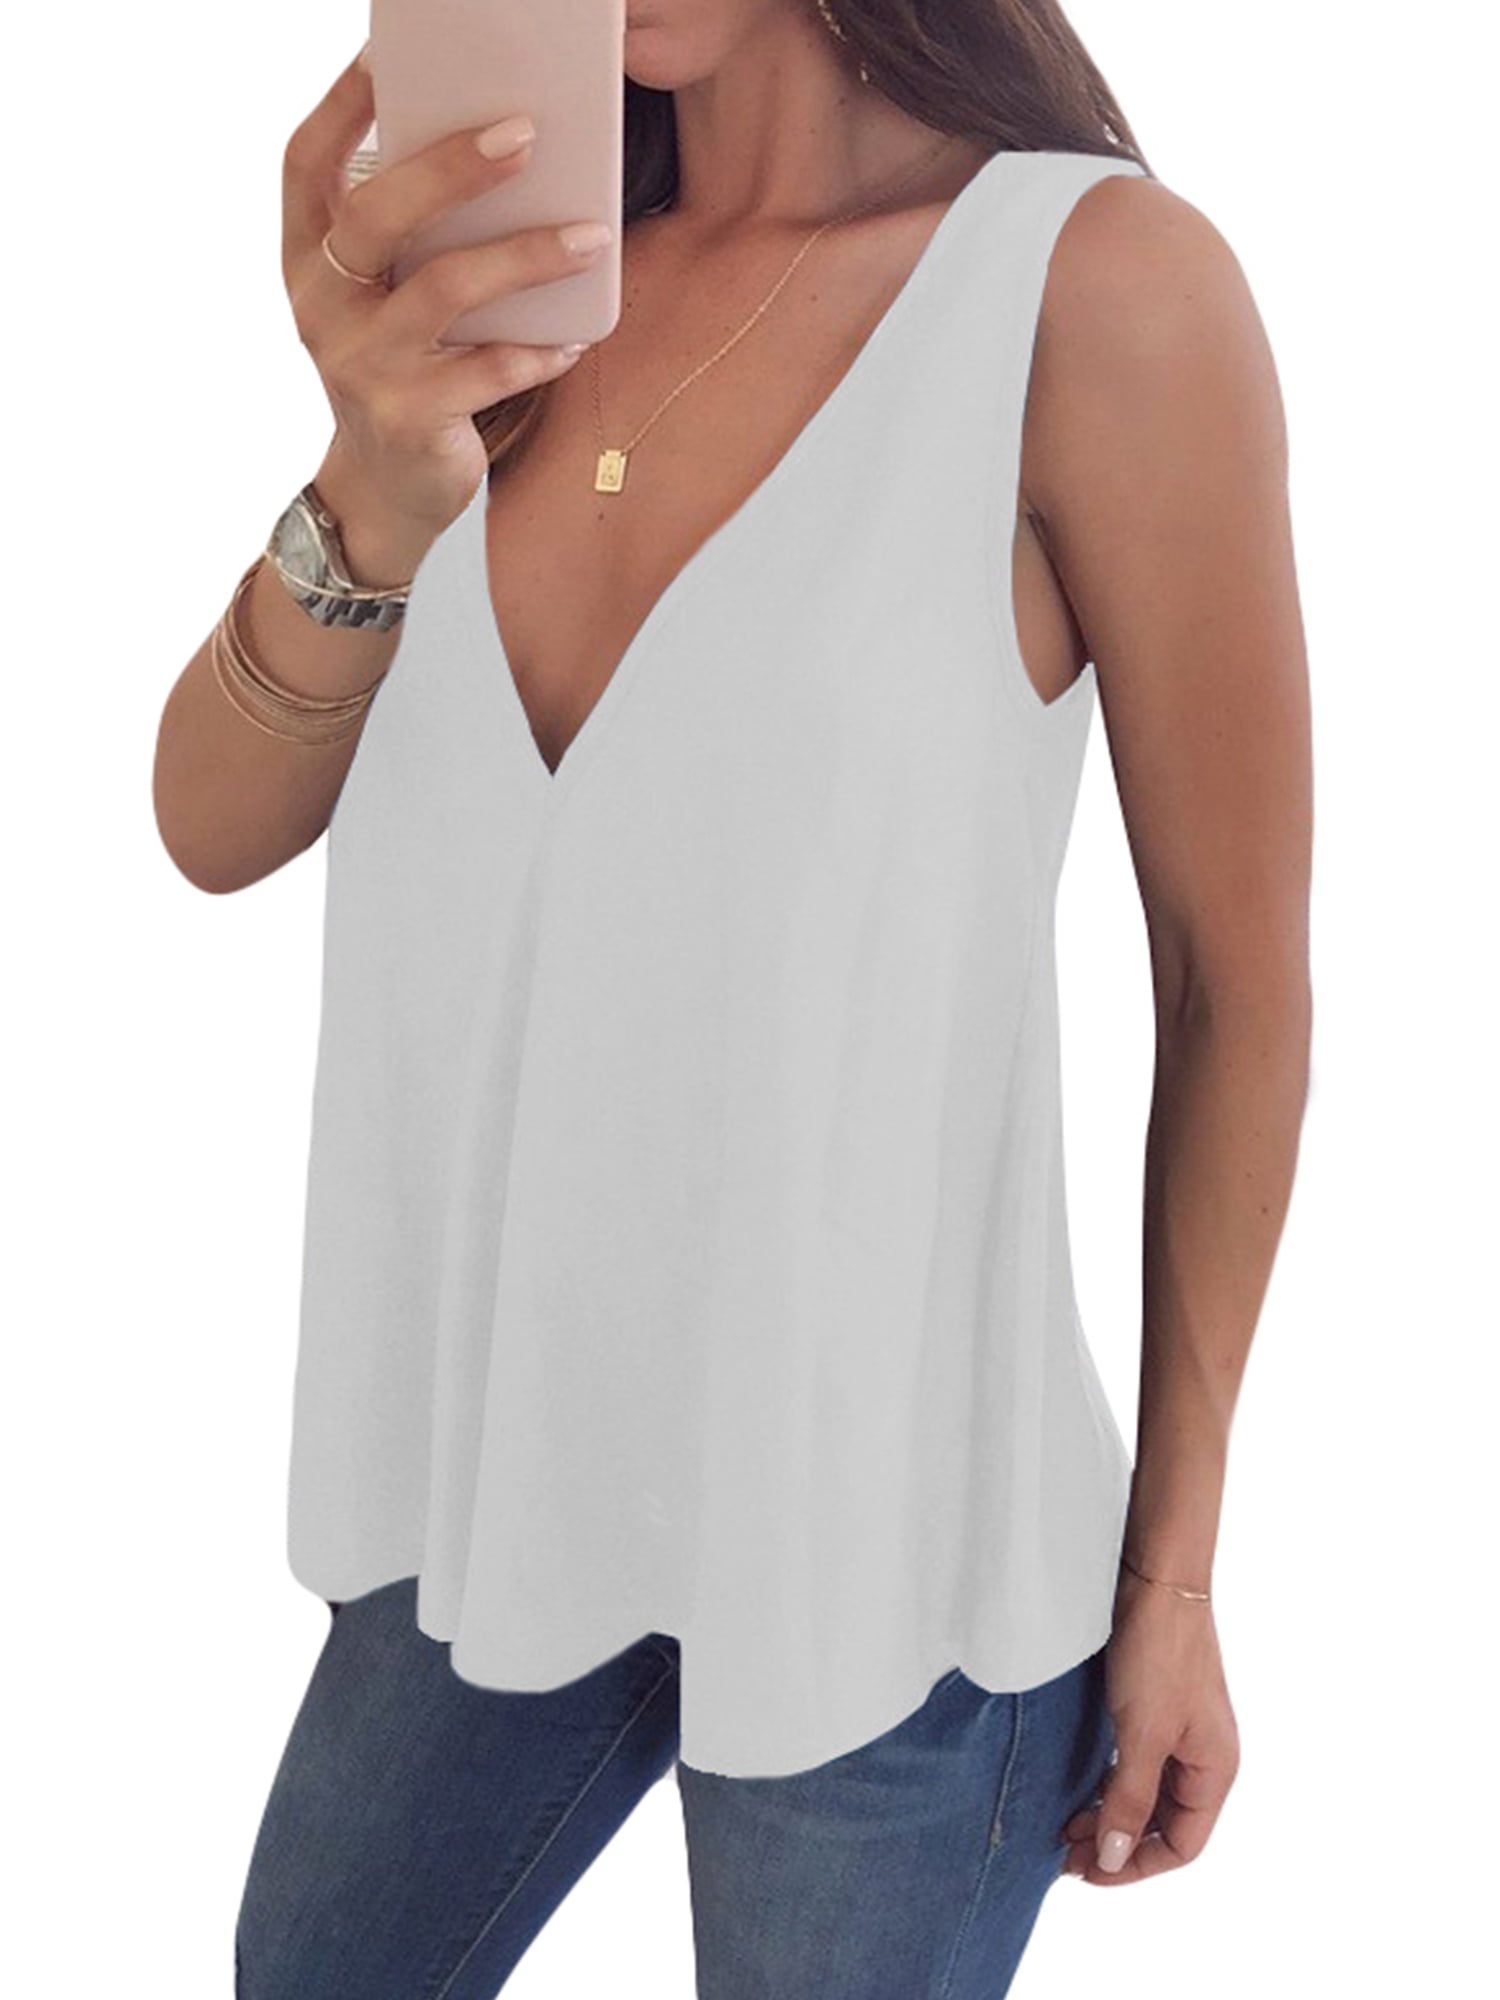 DONTAL Women Sleeveless T-Shirt Summer Plus Size Blouse V Neck Loose Tank Tops 